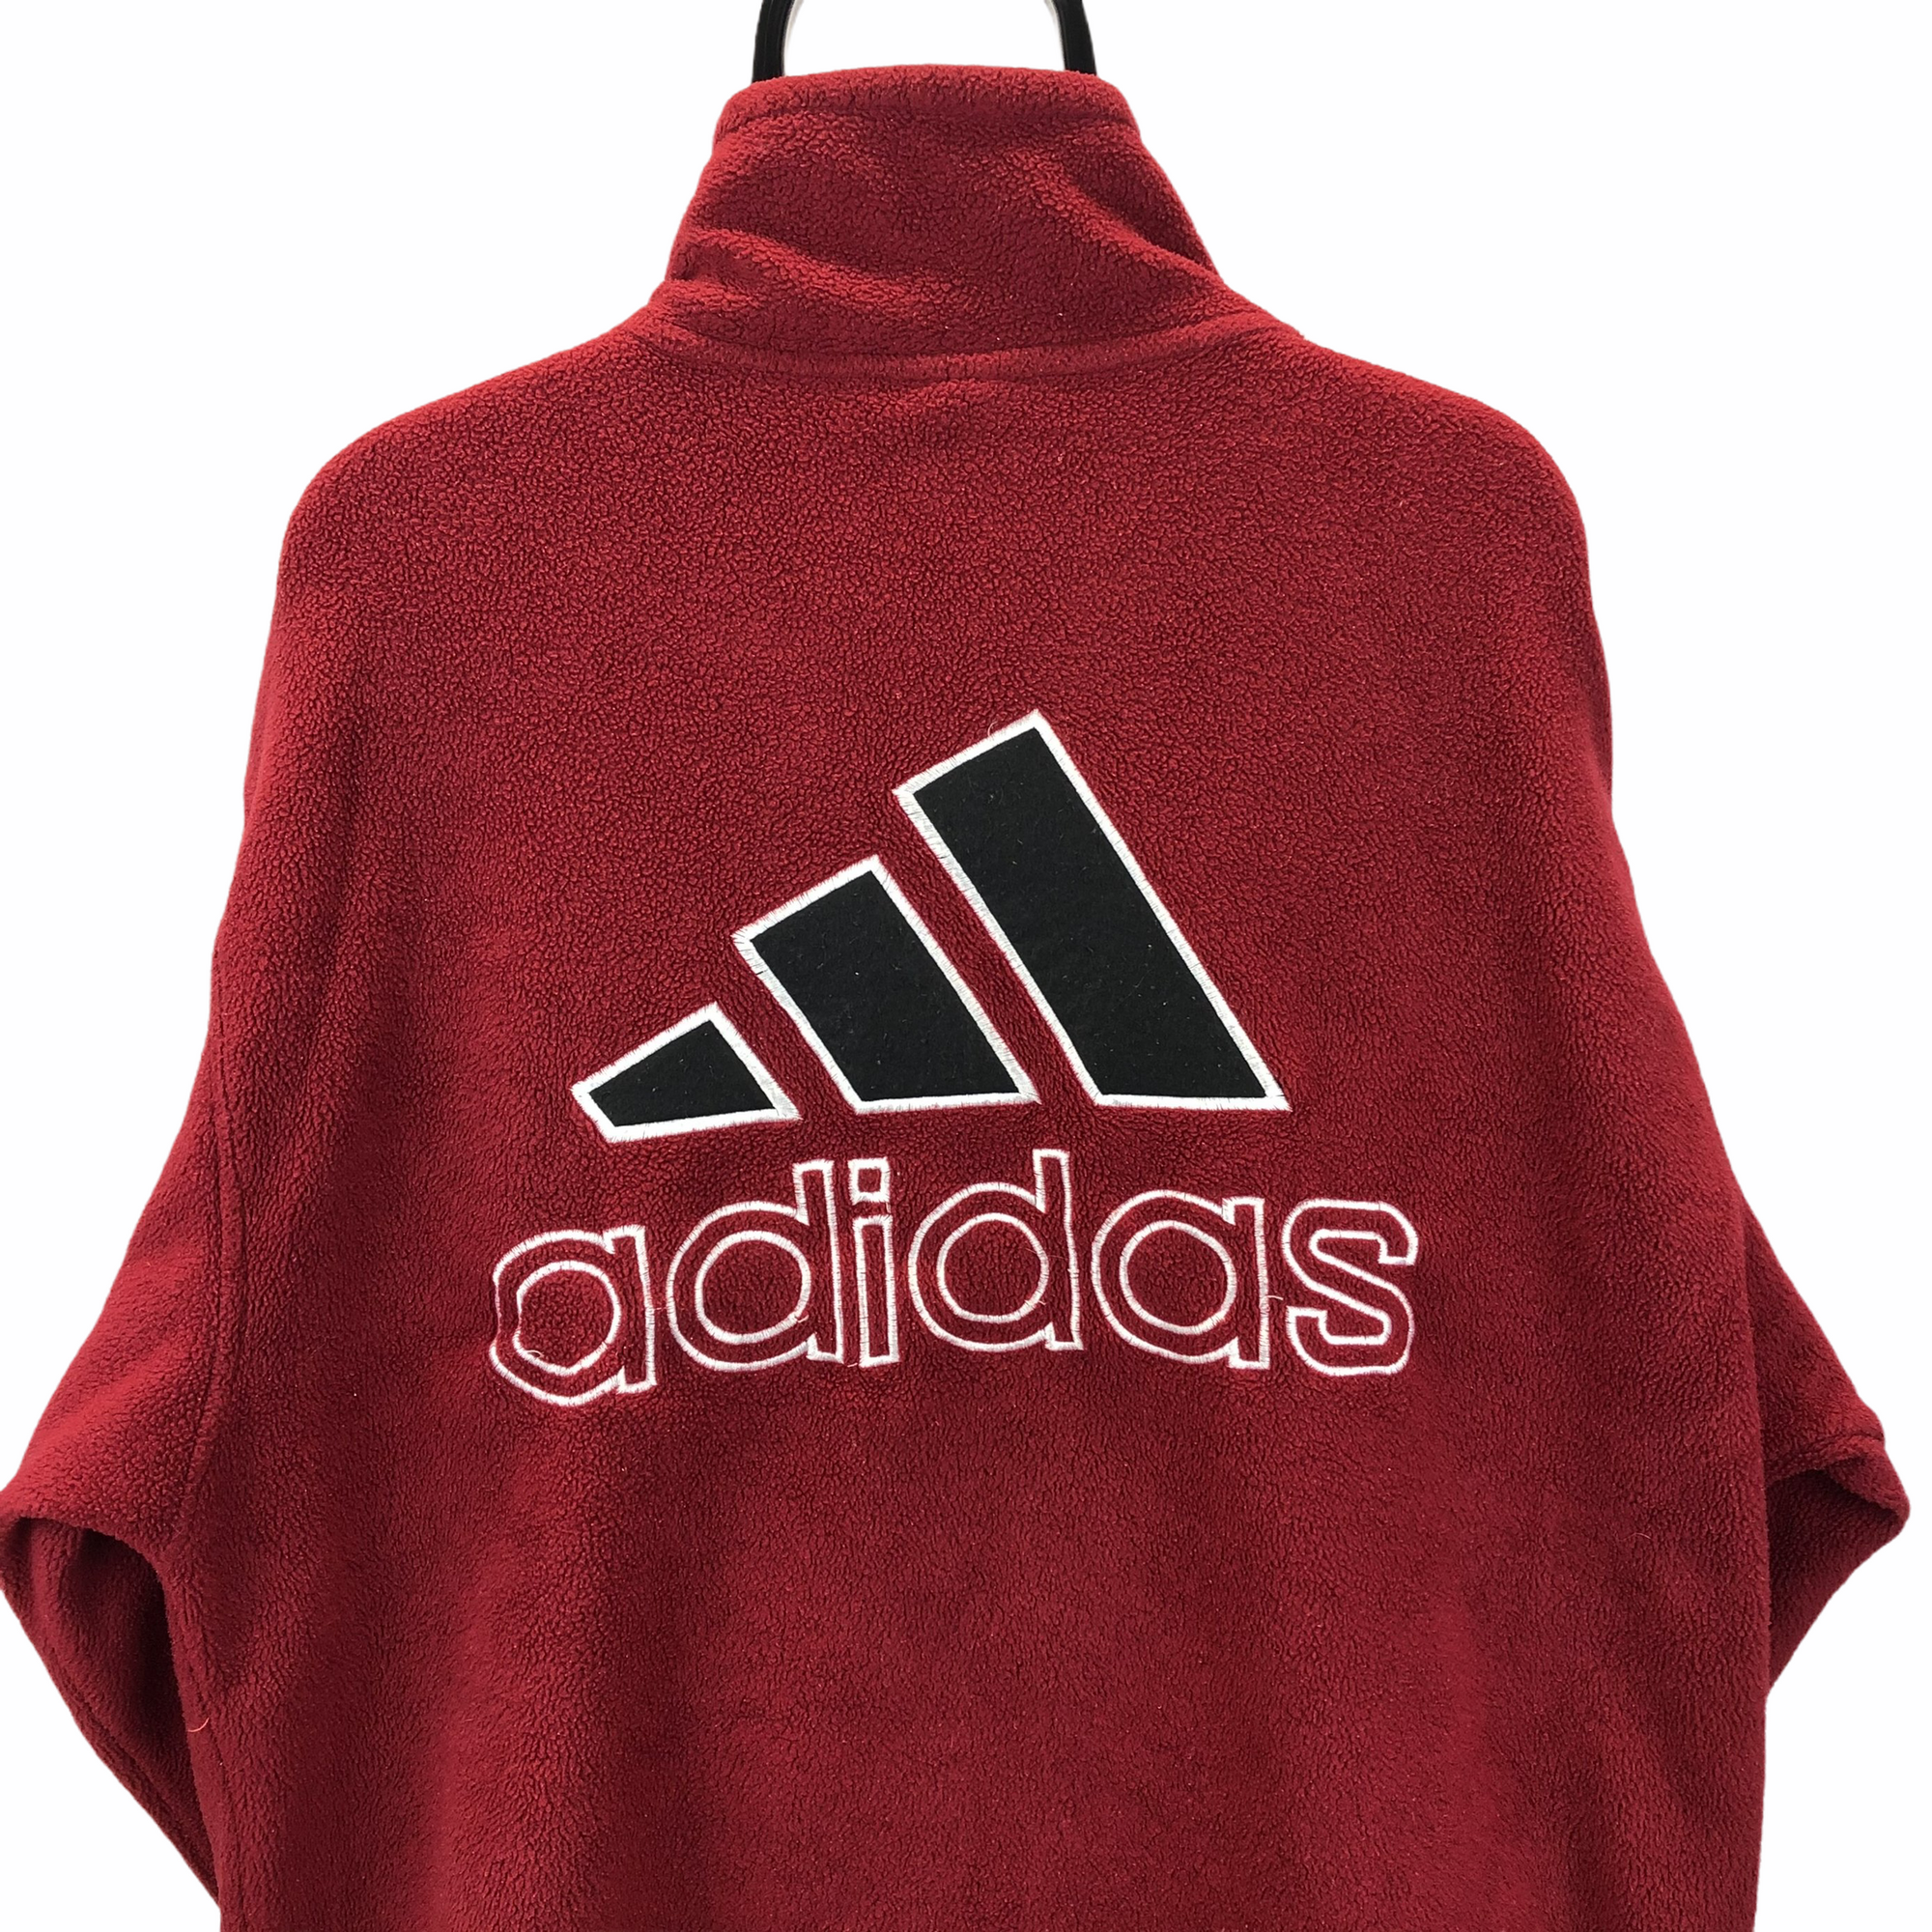 Vintage 90s Adidas Spellout Fleece in Red - Men's Large/Women's XL